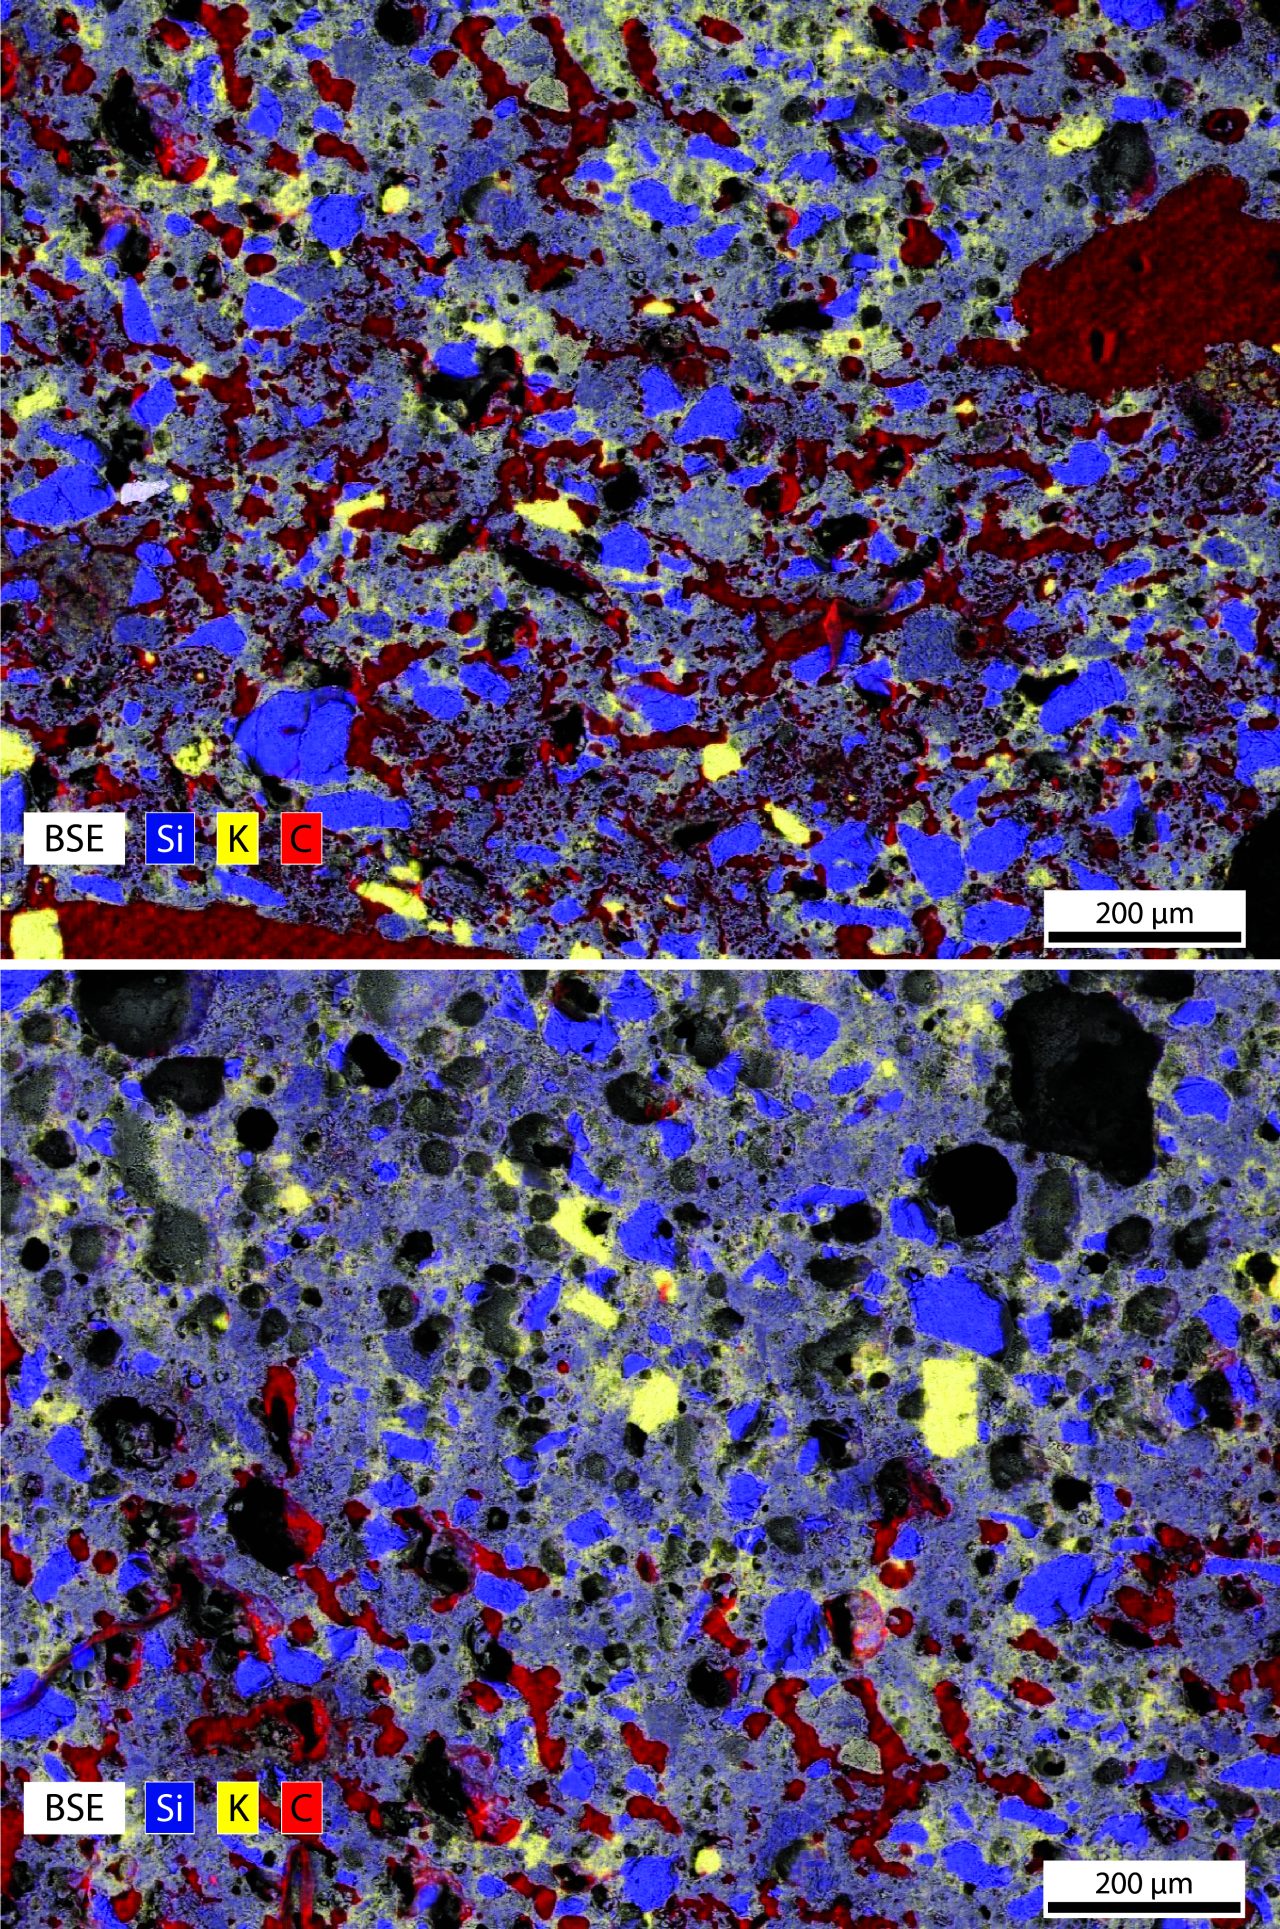 EDS成分图覆盖在BSE图像上，显示了从陶瓷容器的外部区域过渡到更接近容器内部的中间区域的过渡。虽然构成回火的矿物类型(例如石英、钾长石)没有改变，但有机物质的丰度(这里用红色C表示)迅速减少，气泡的丰度增加。